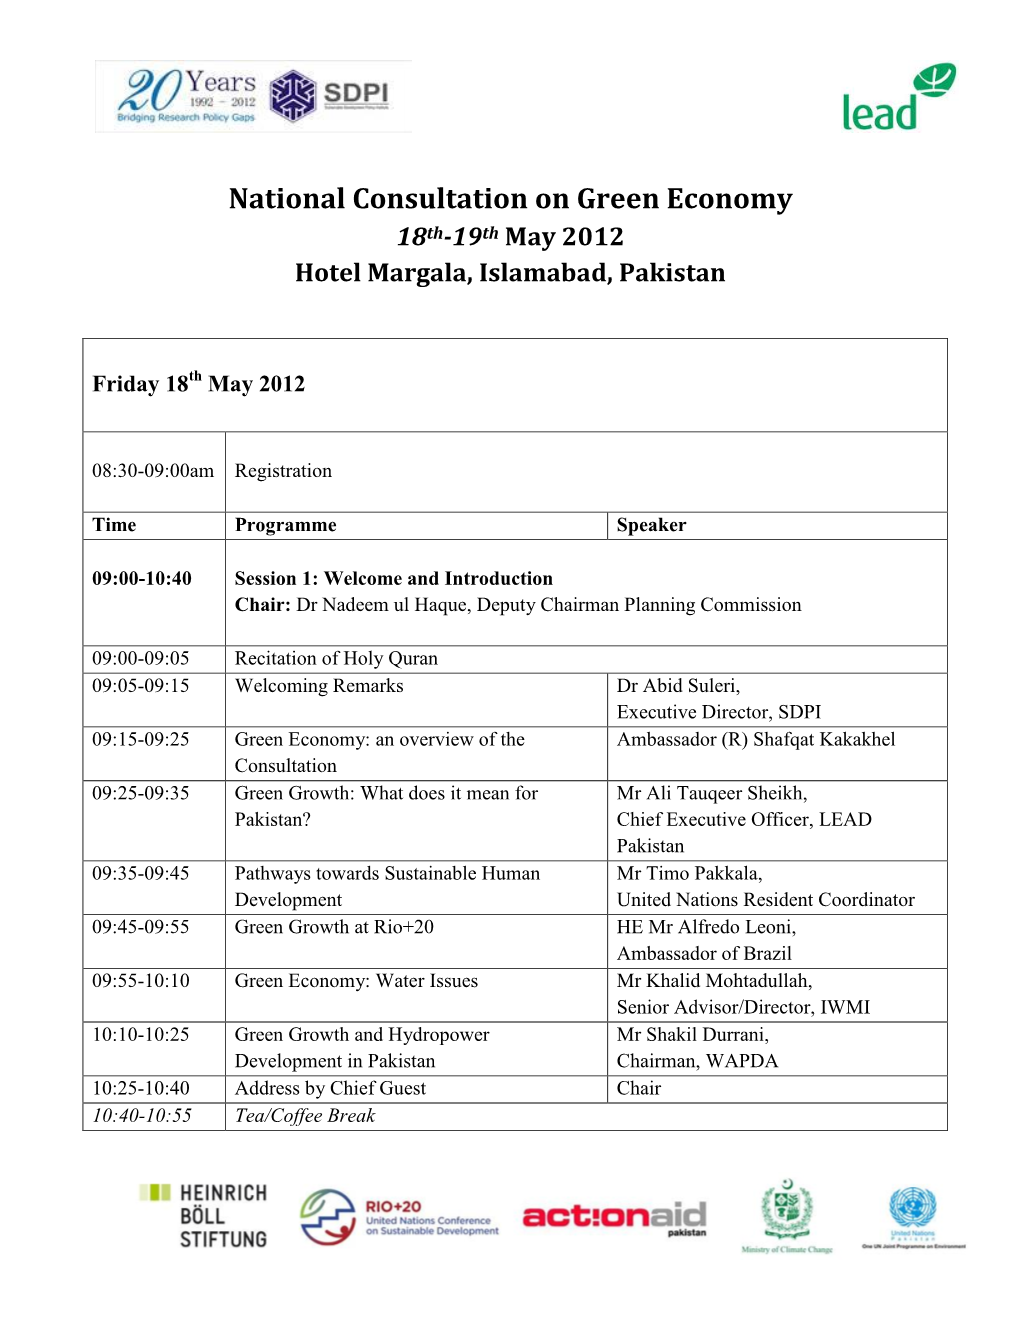 National Consultation on Green Economy 18Th-19Th May 2012 Hotel Margala, Islamabad, Pakistan